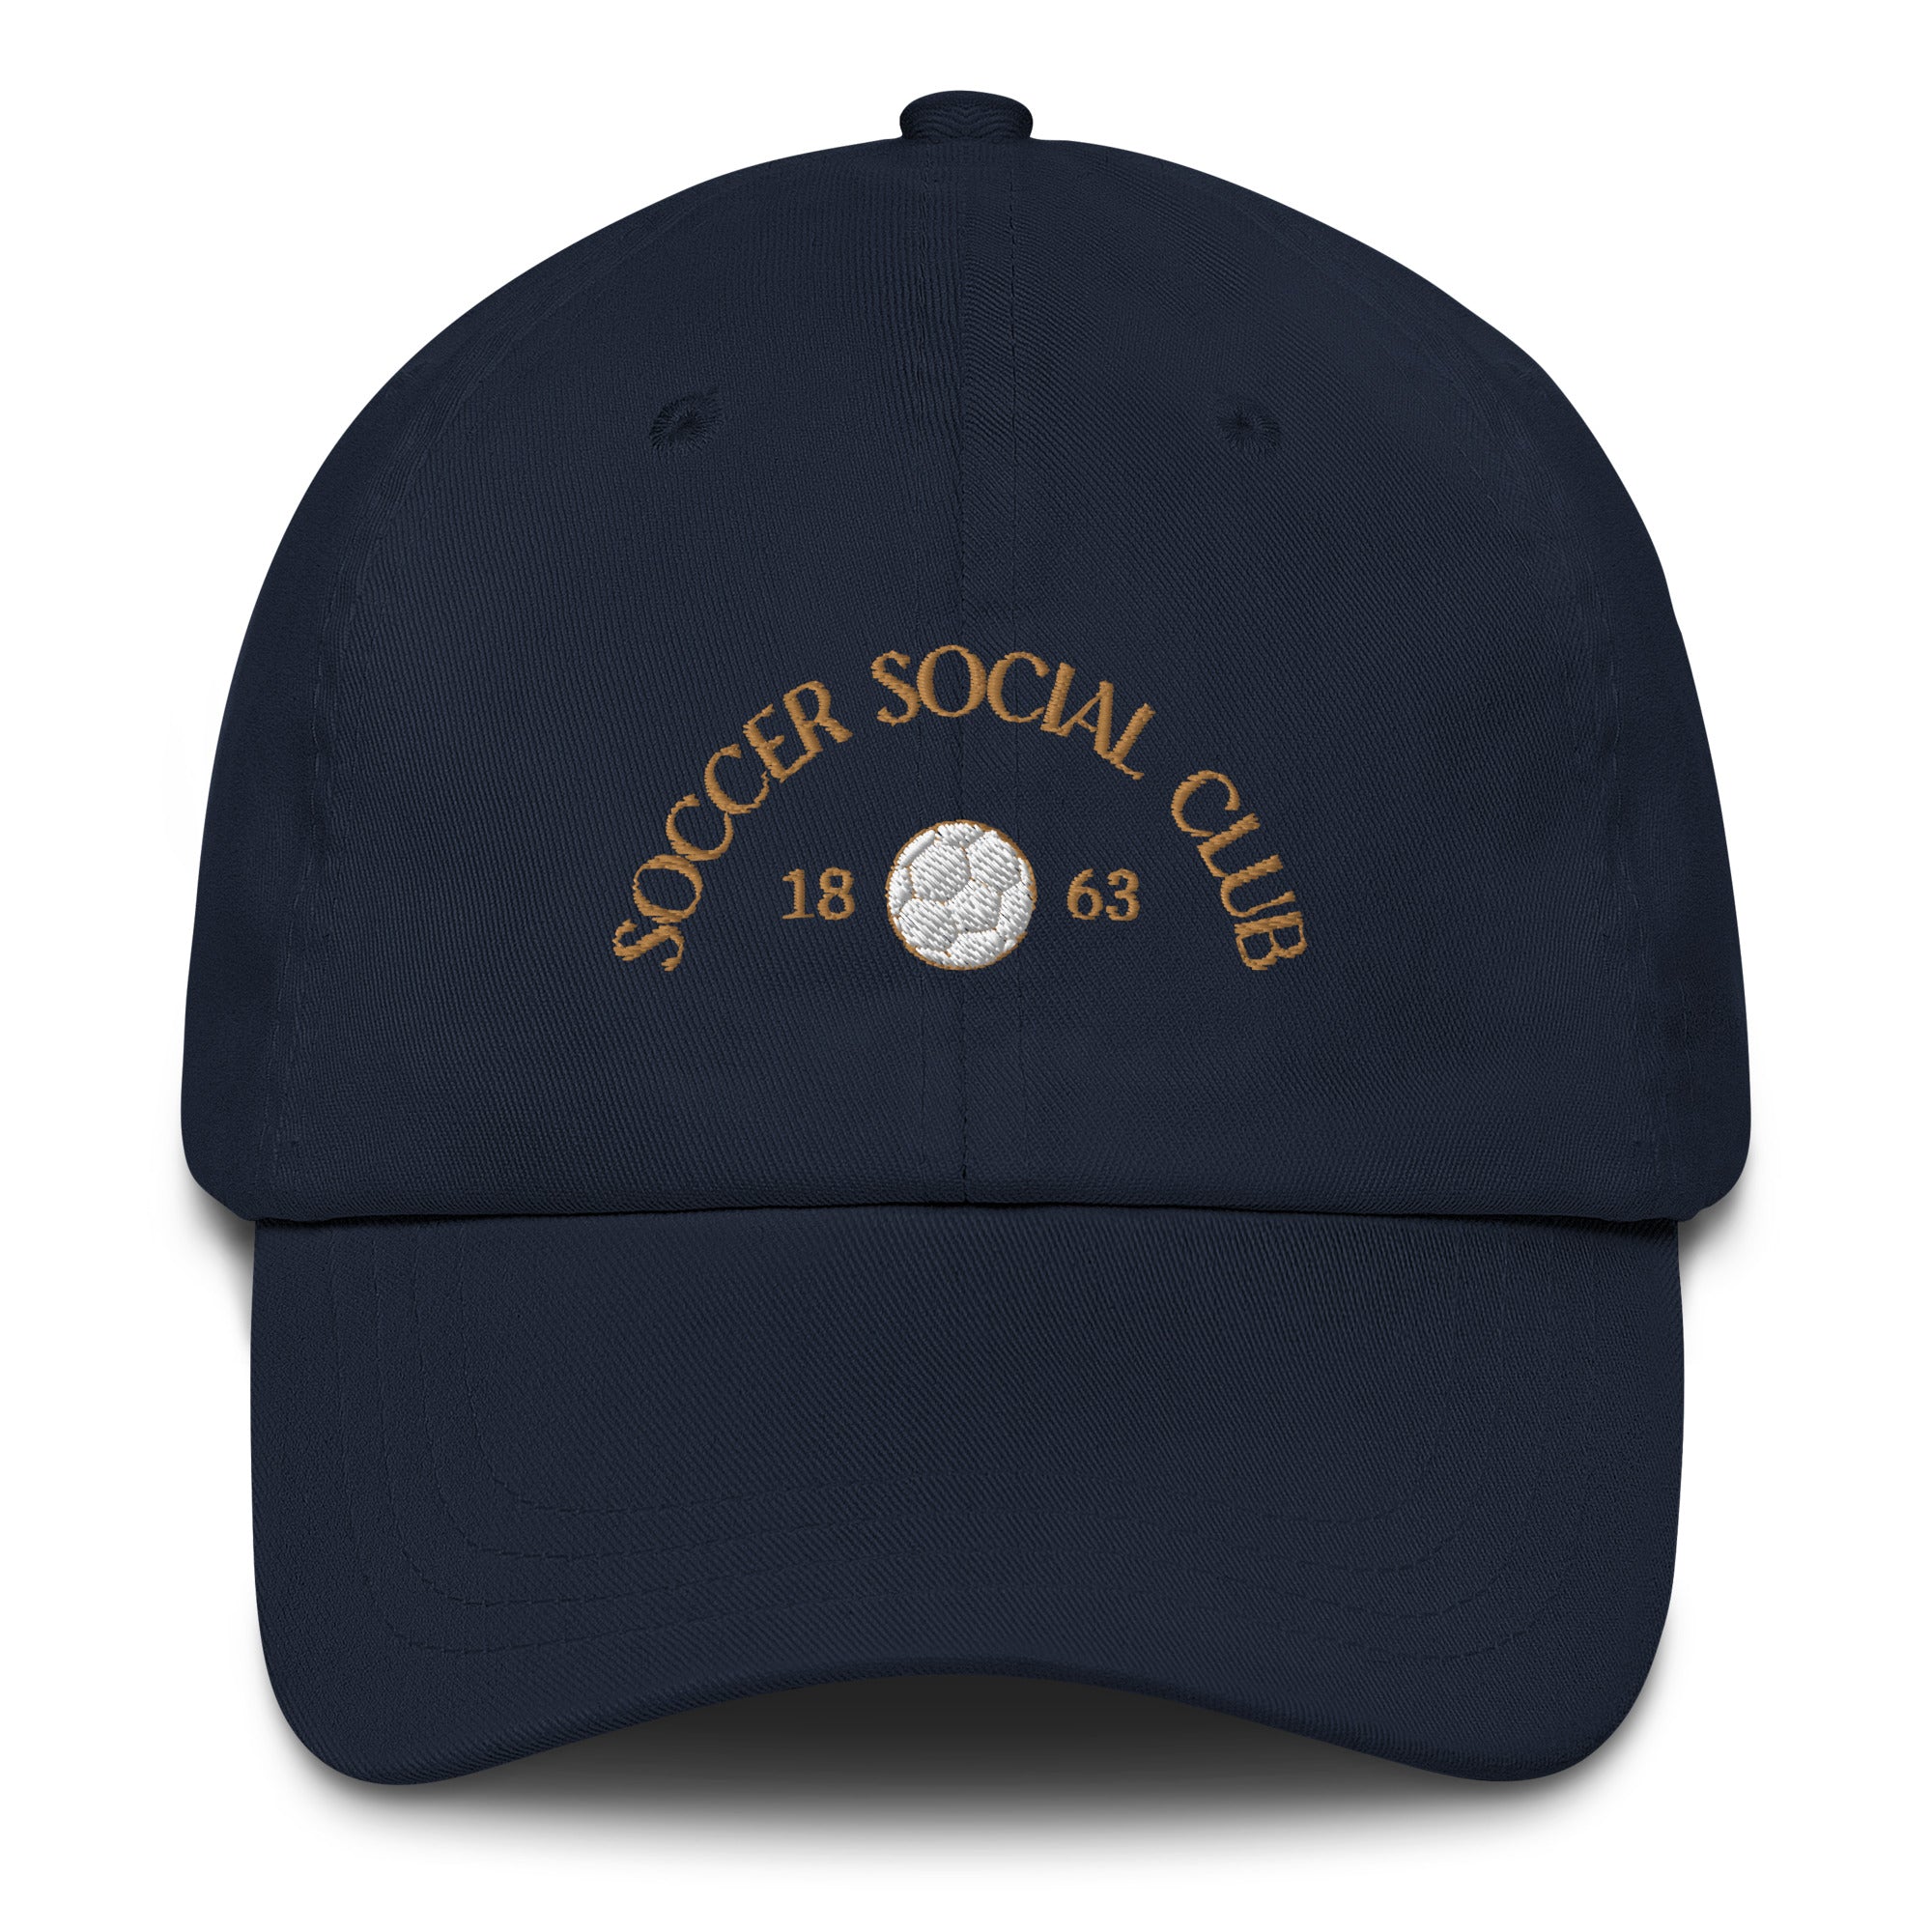 Soccer Social Club - Cap